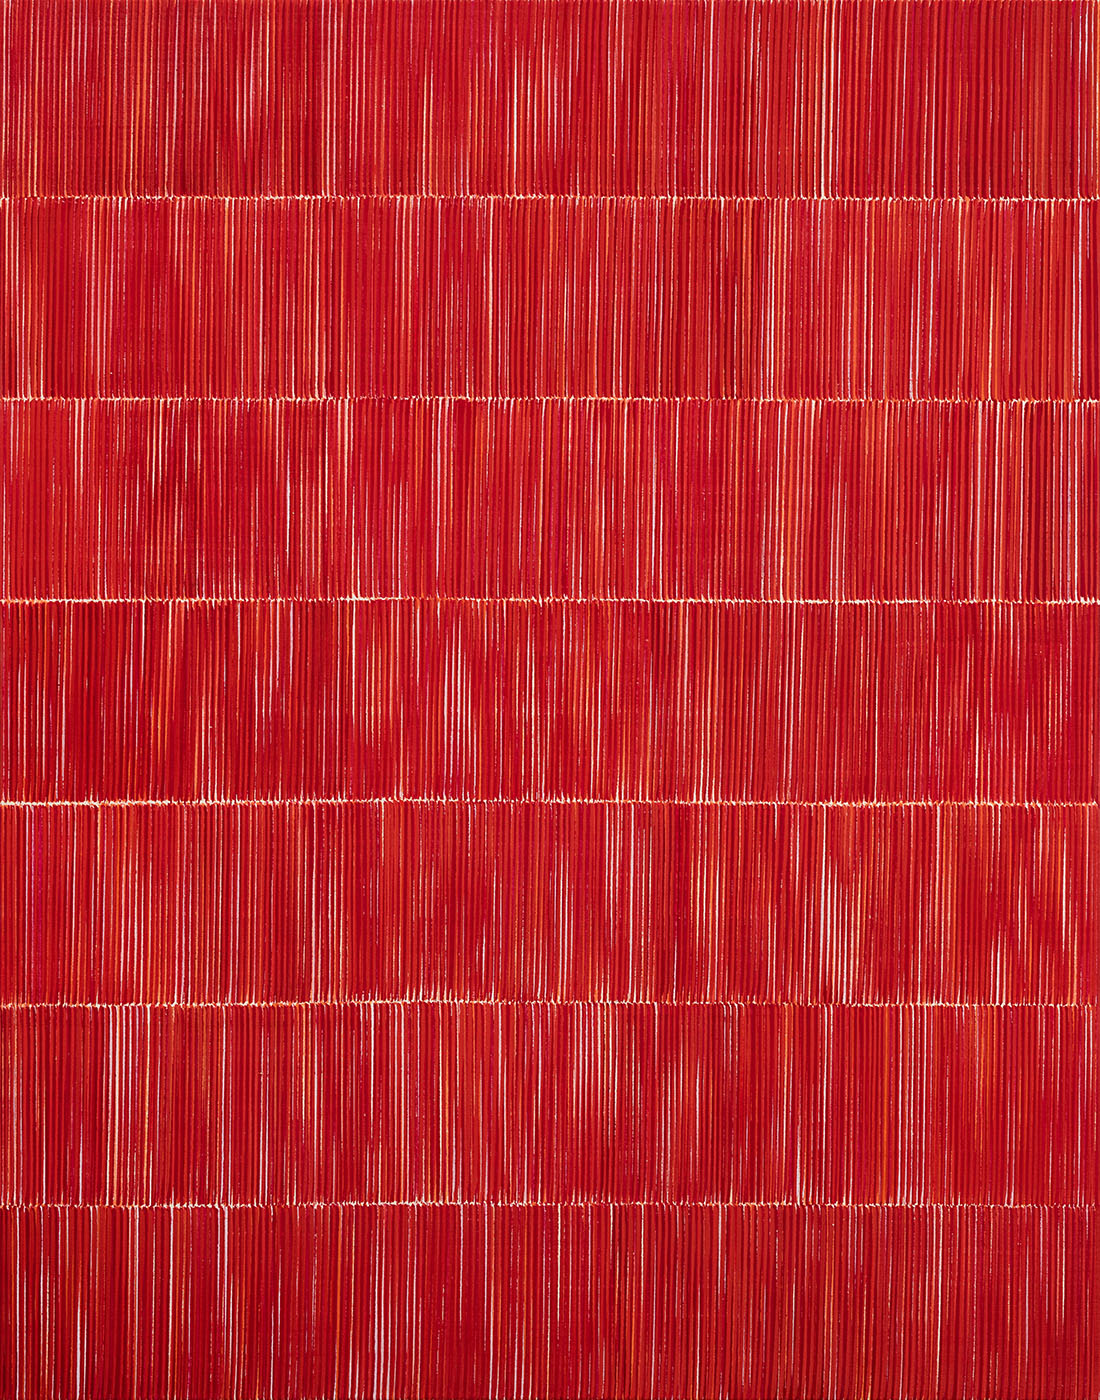 Nikola Dimitrov, KlangRaum XI, 2021, Pigmente, Bindemittel auf Leinwand, 140 × 110 cm